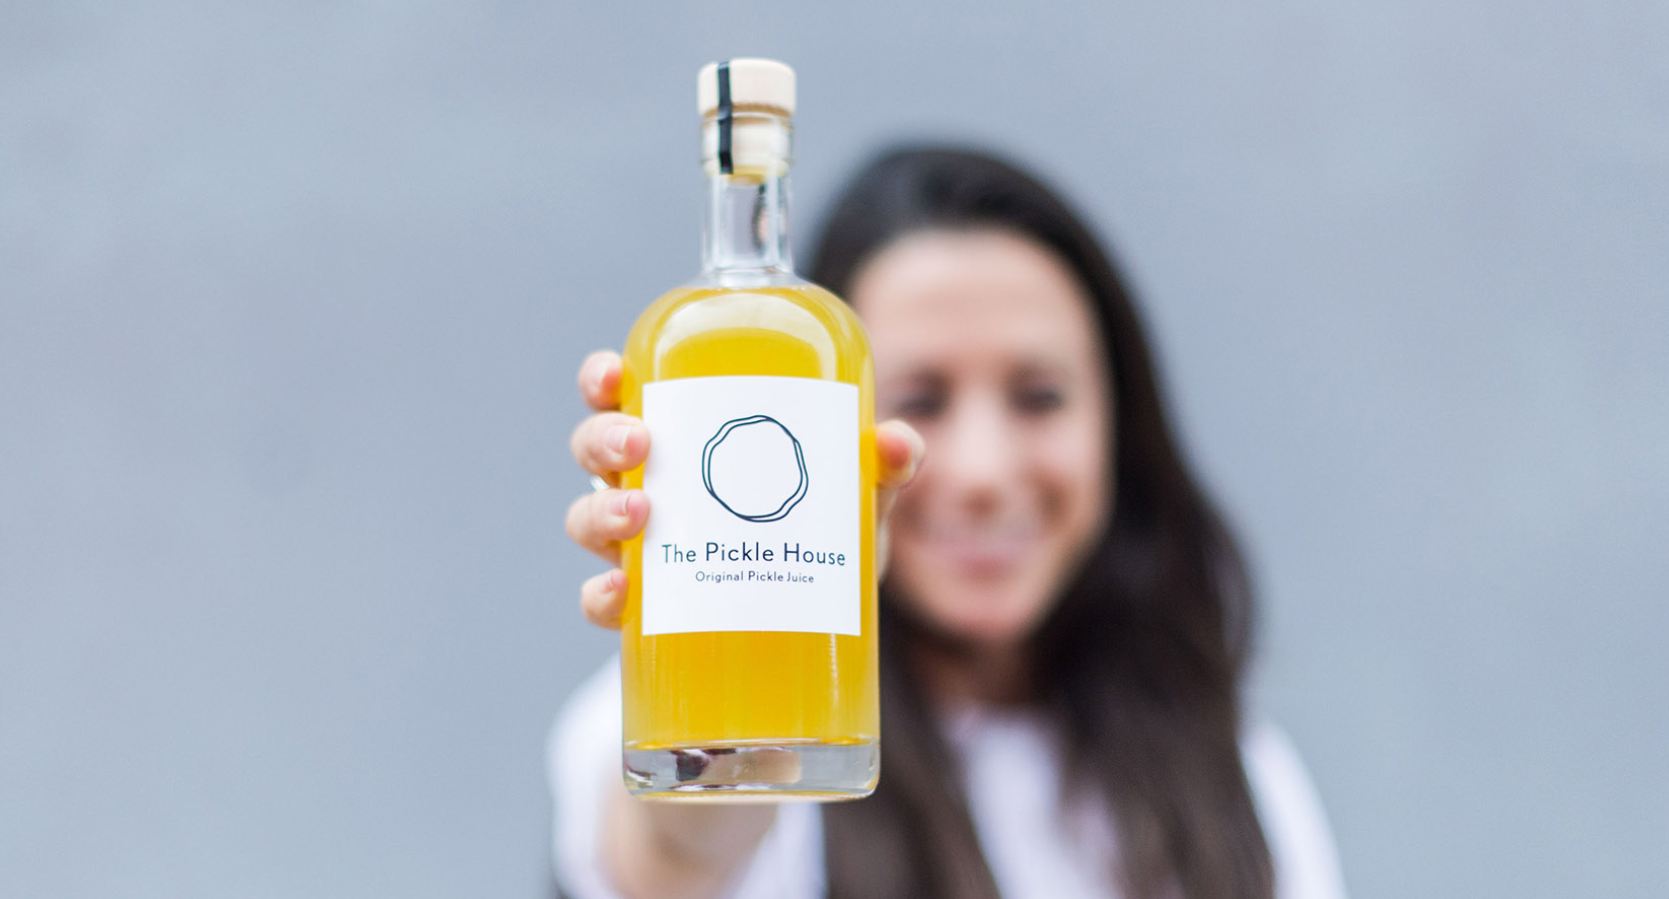 The Pickle House - London Based Original Pickle Juice Brand